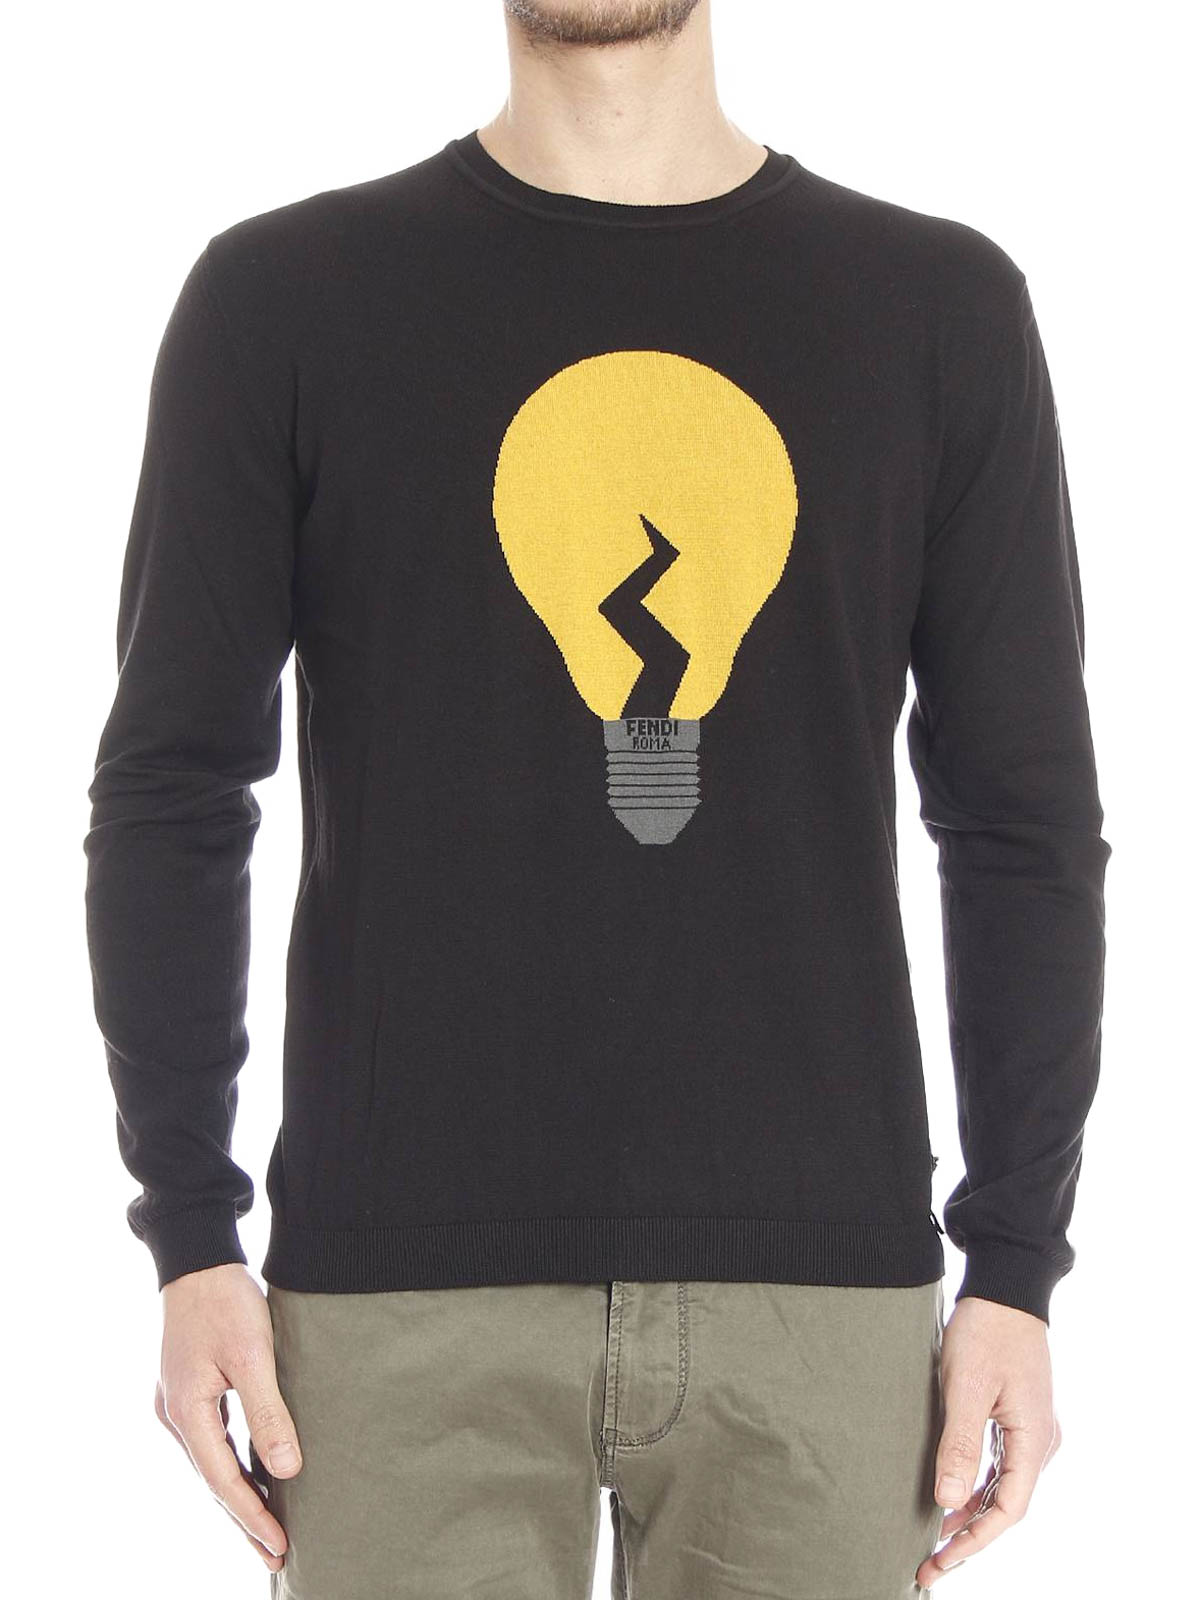 fendi light bulb shirt